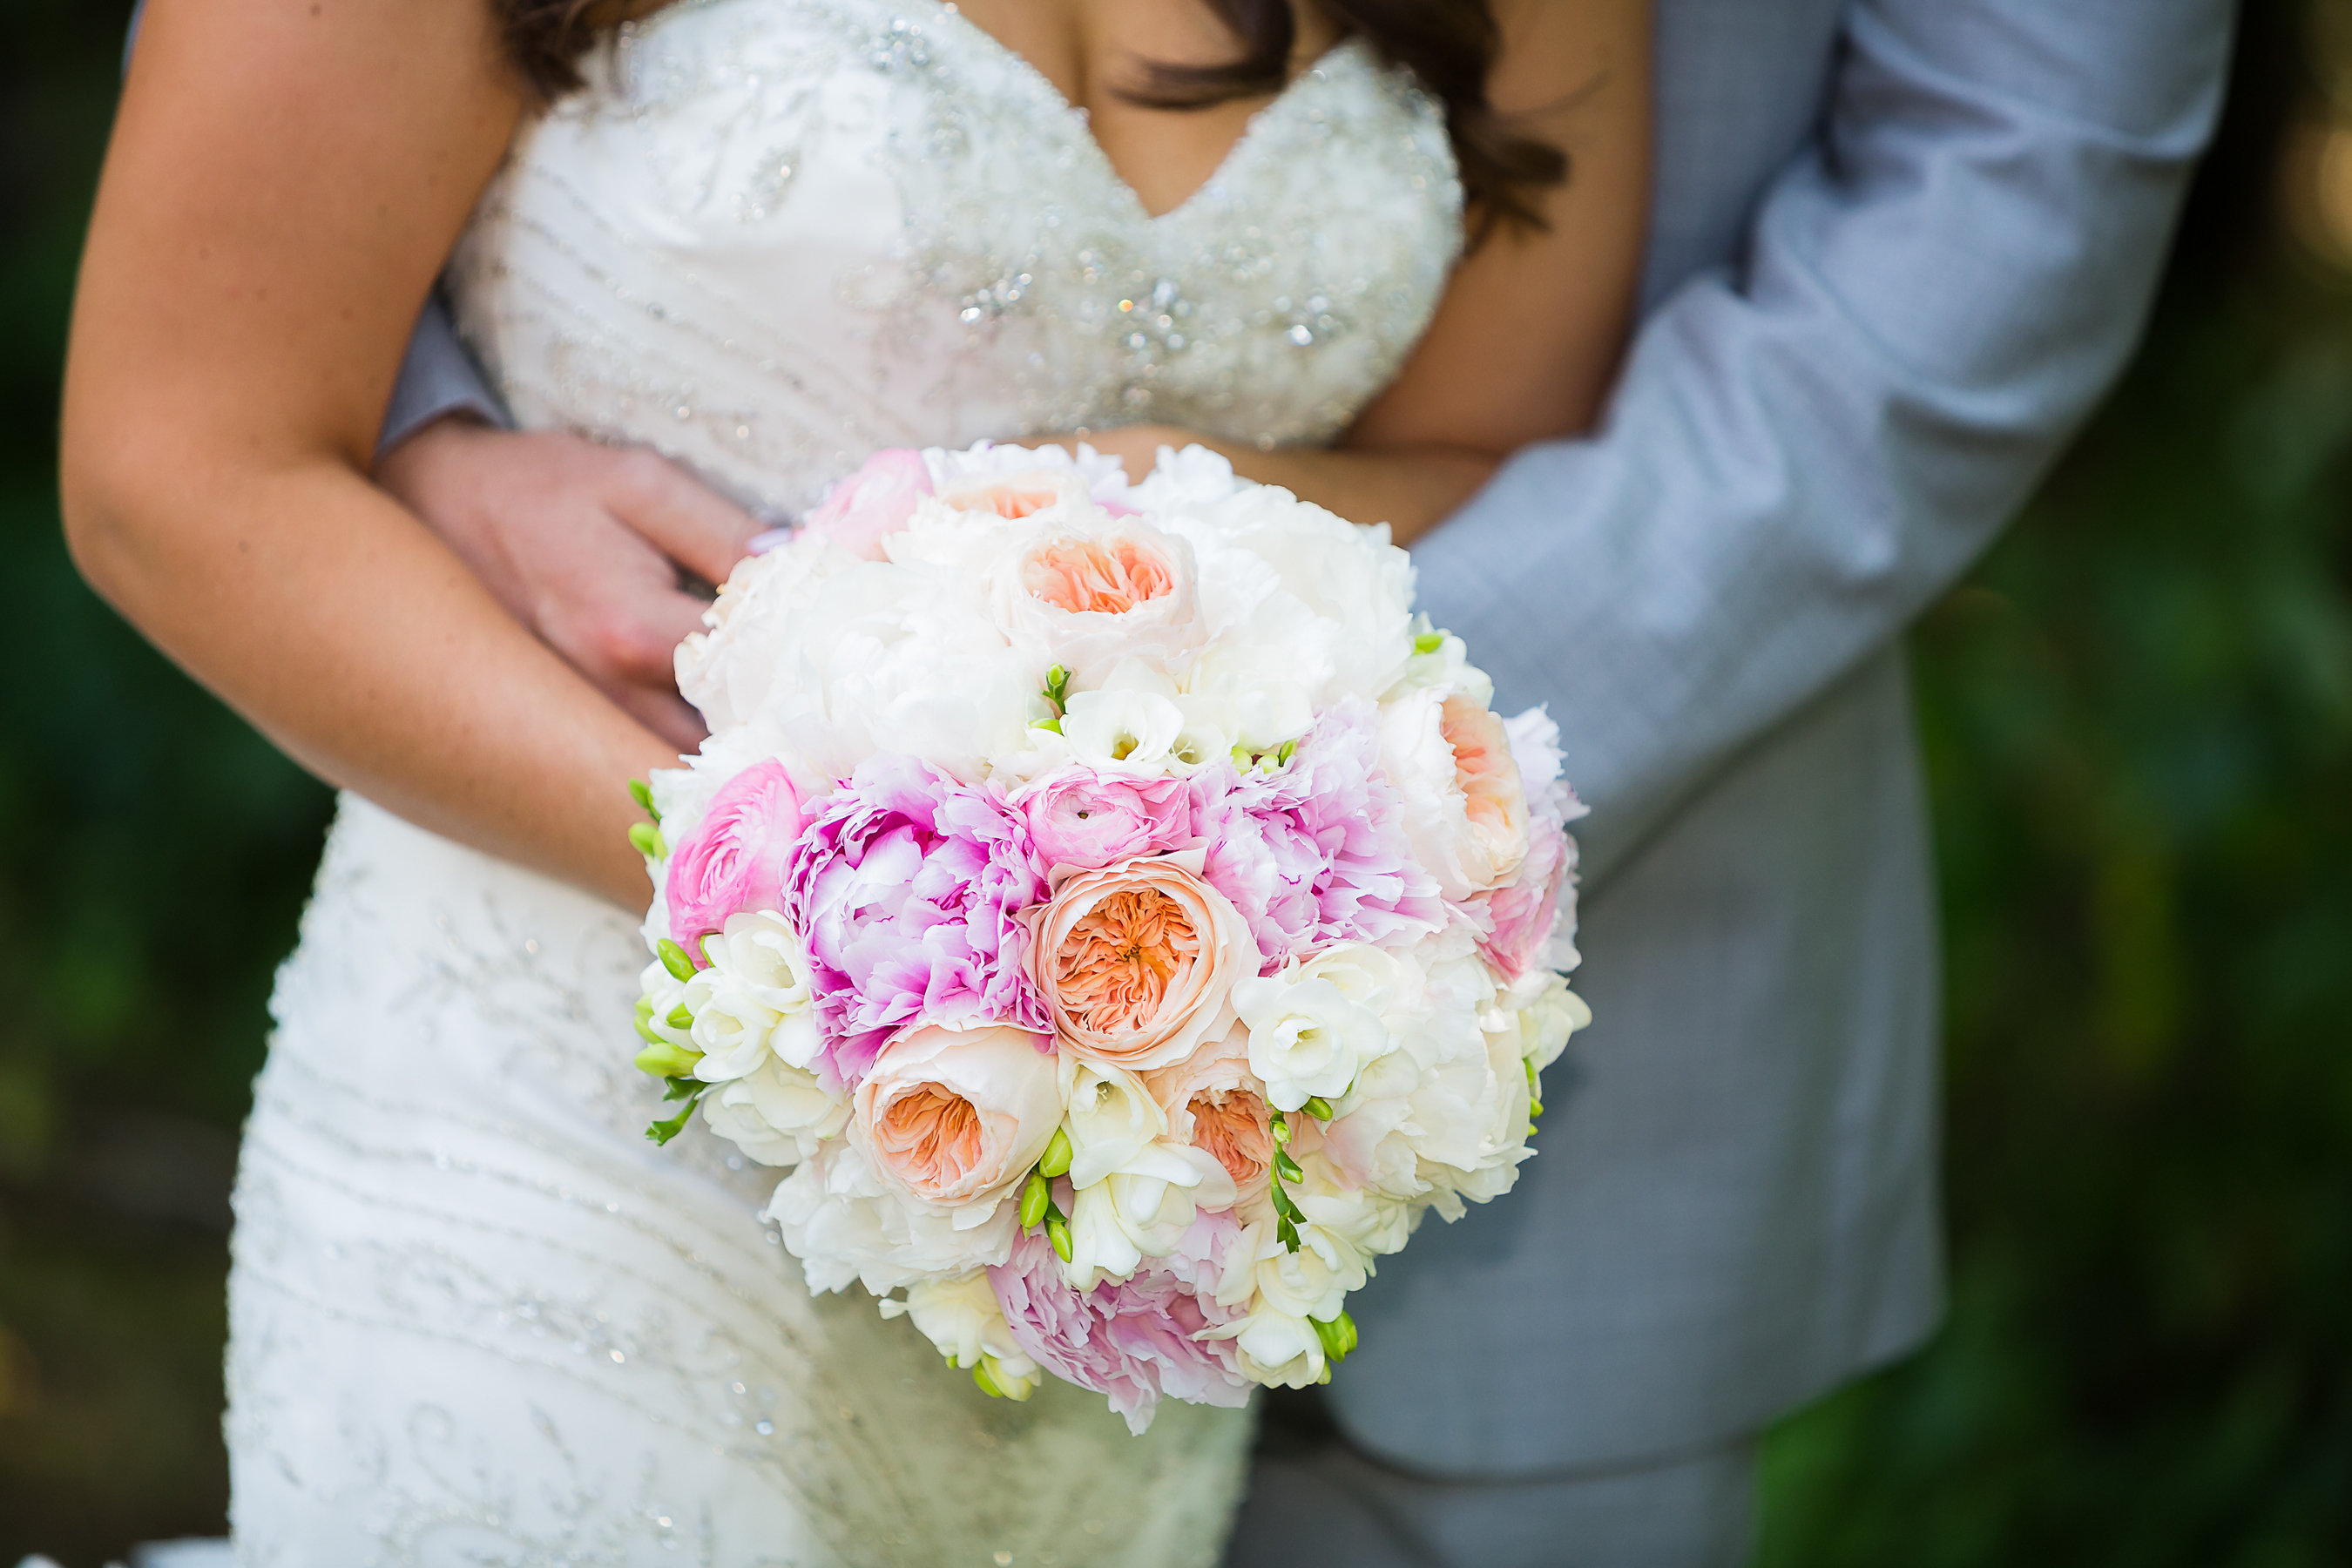 Round bridal bouquet with orange roses and white hydrangeas